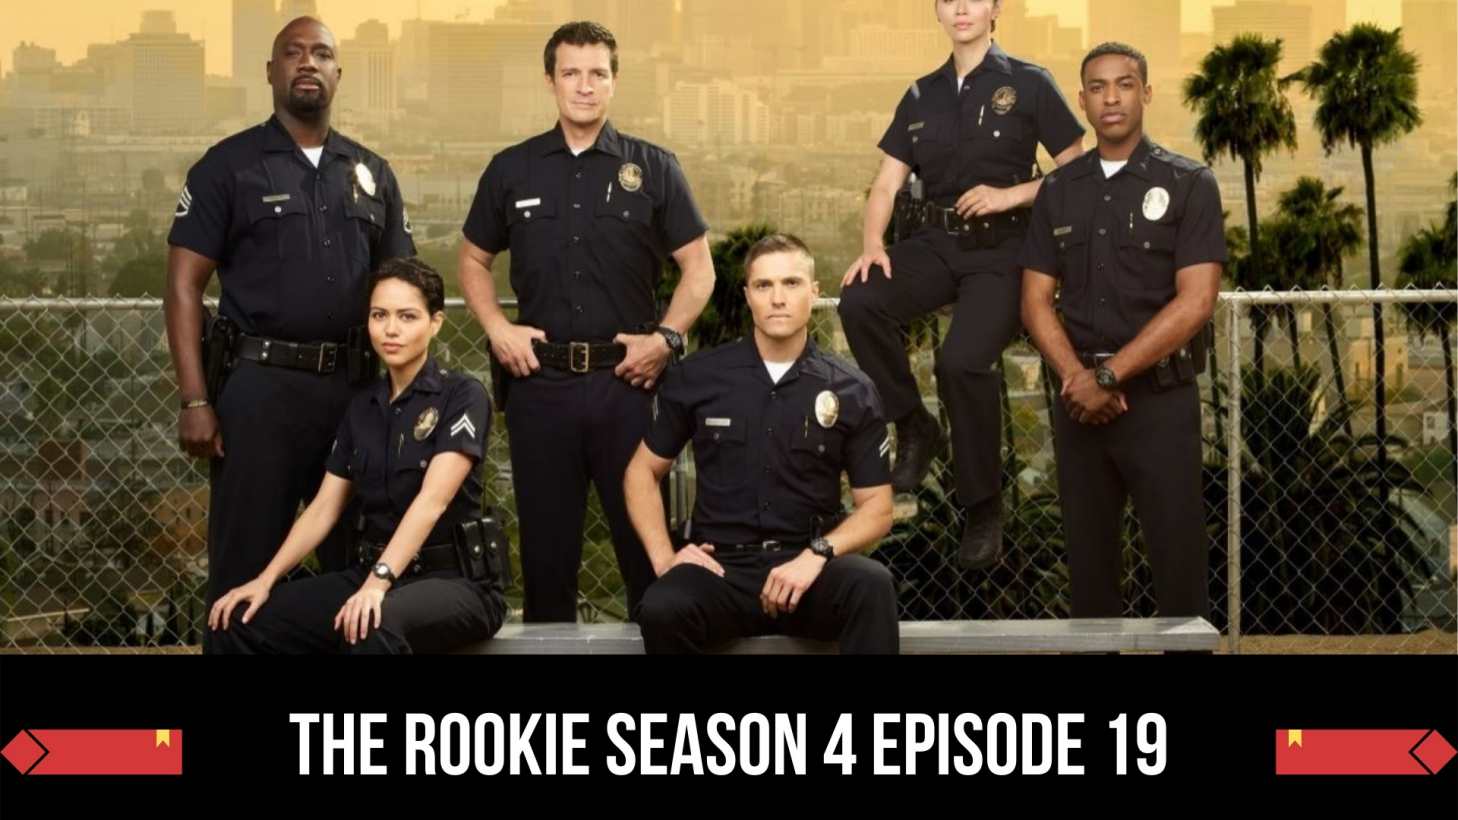 'The Rookie' Season 4 Episode 19 Release Date